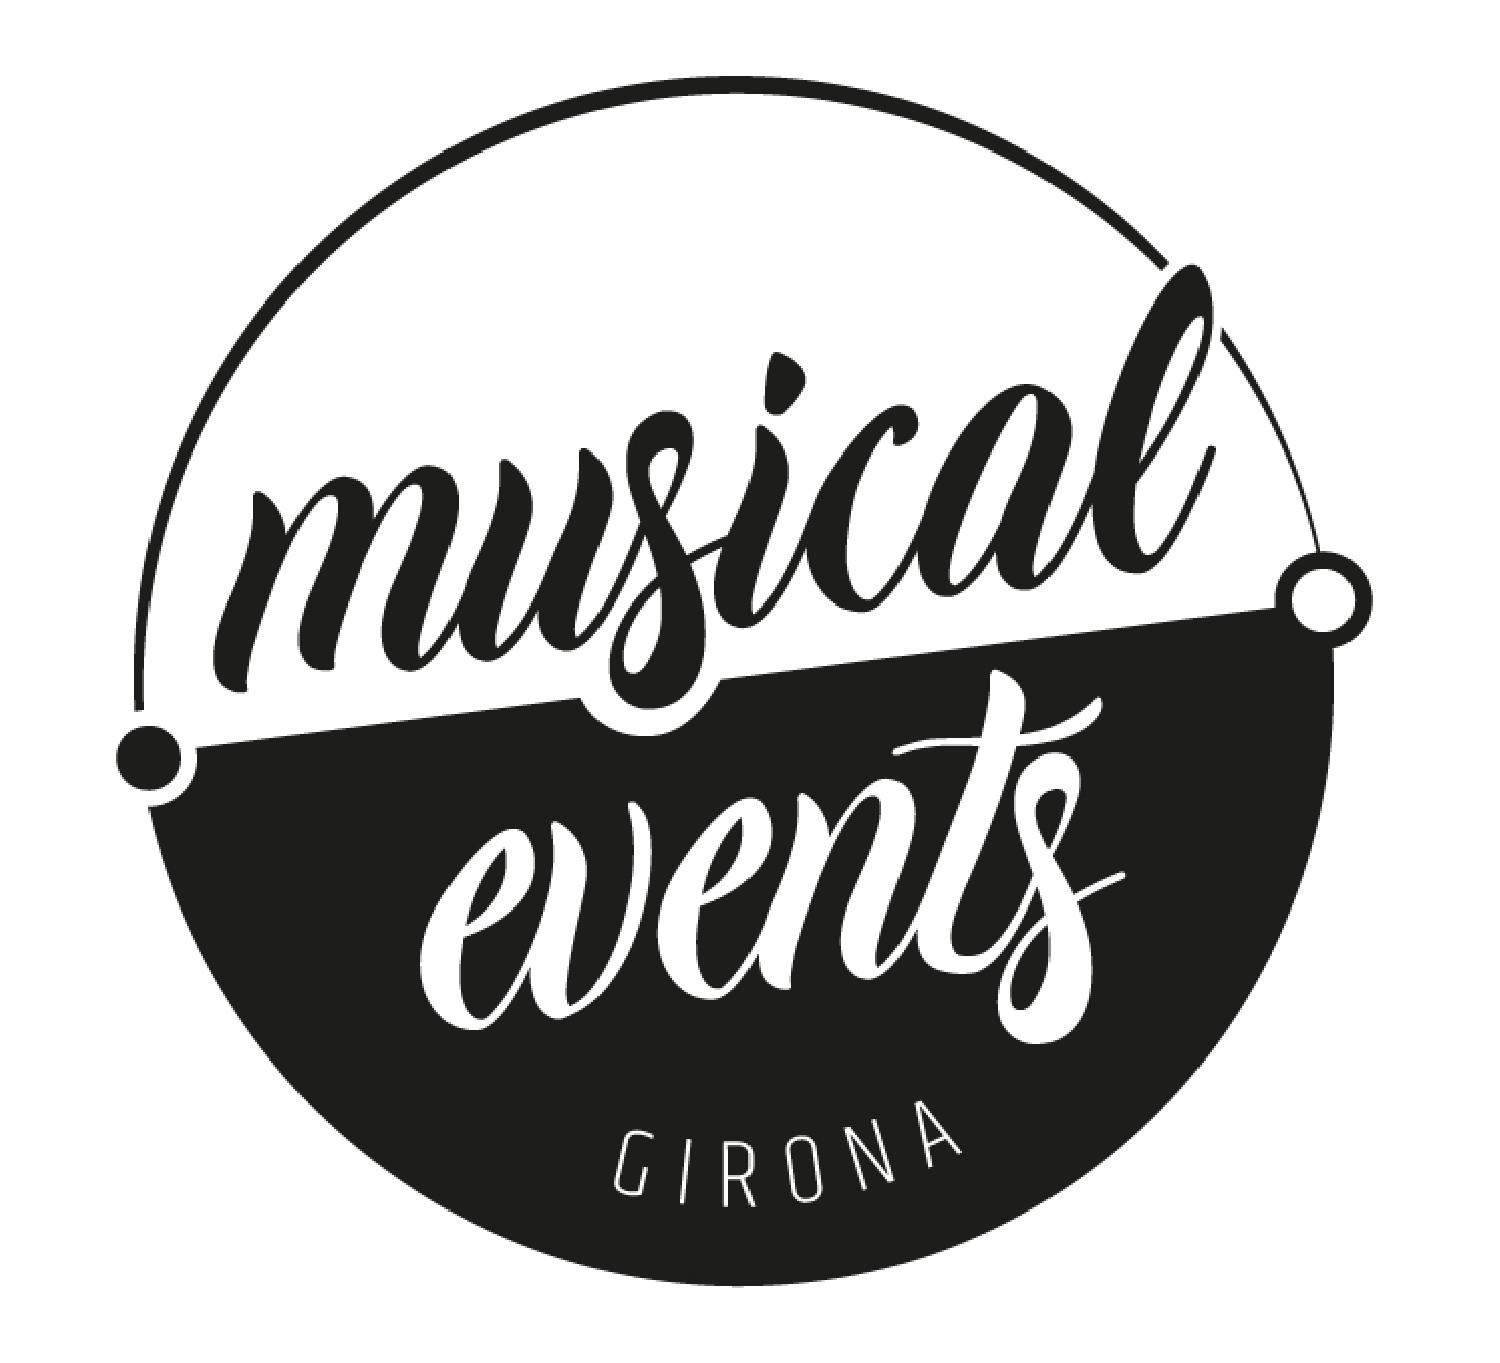 Girona Musical Events